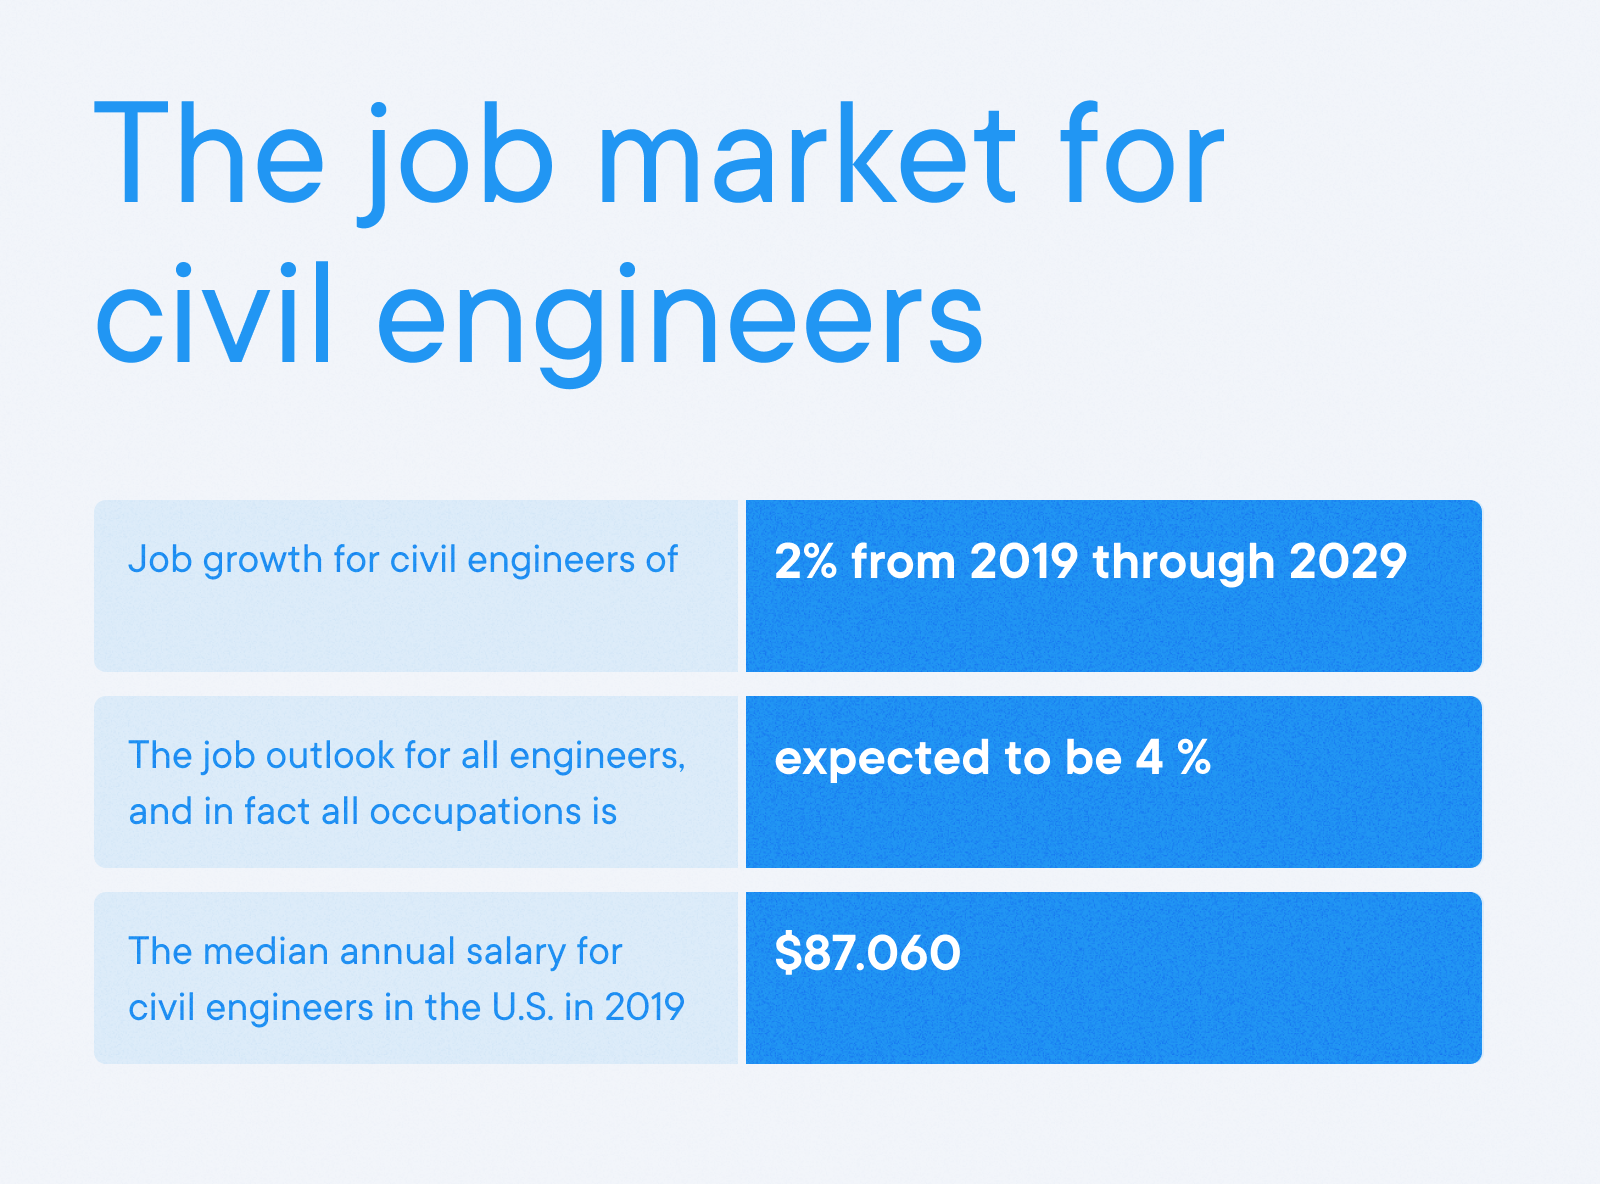 Civil Engineer - The job market for civil engineers